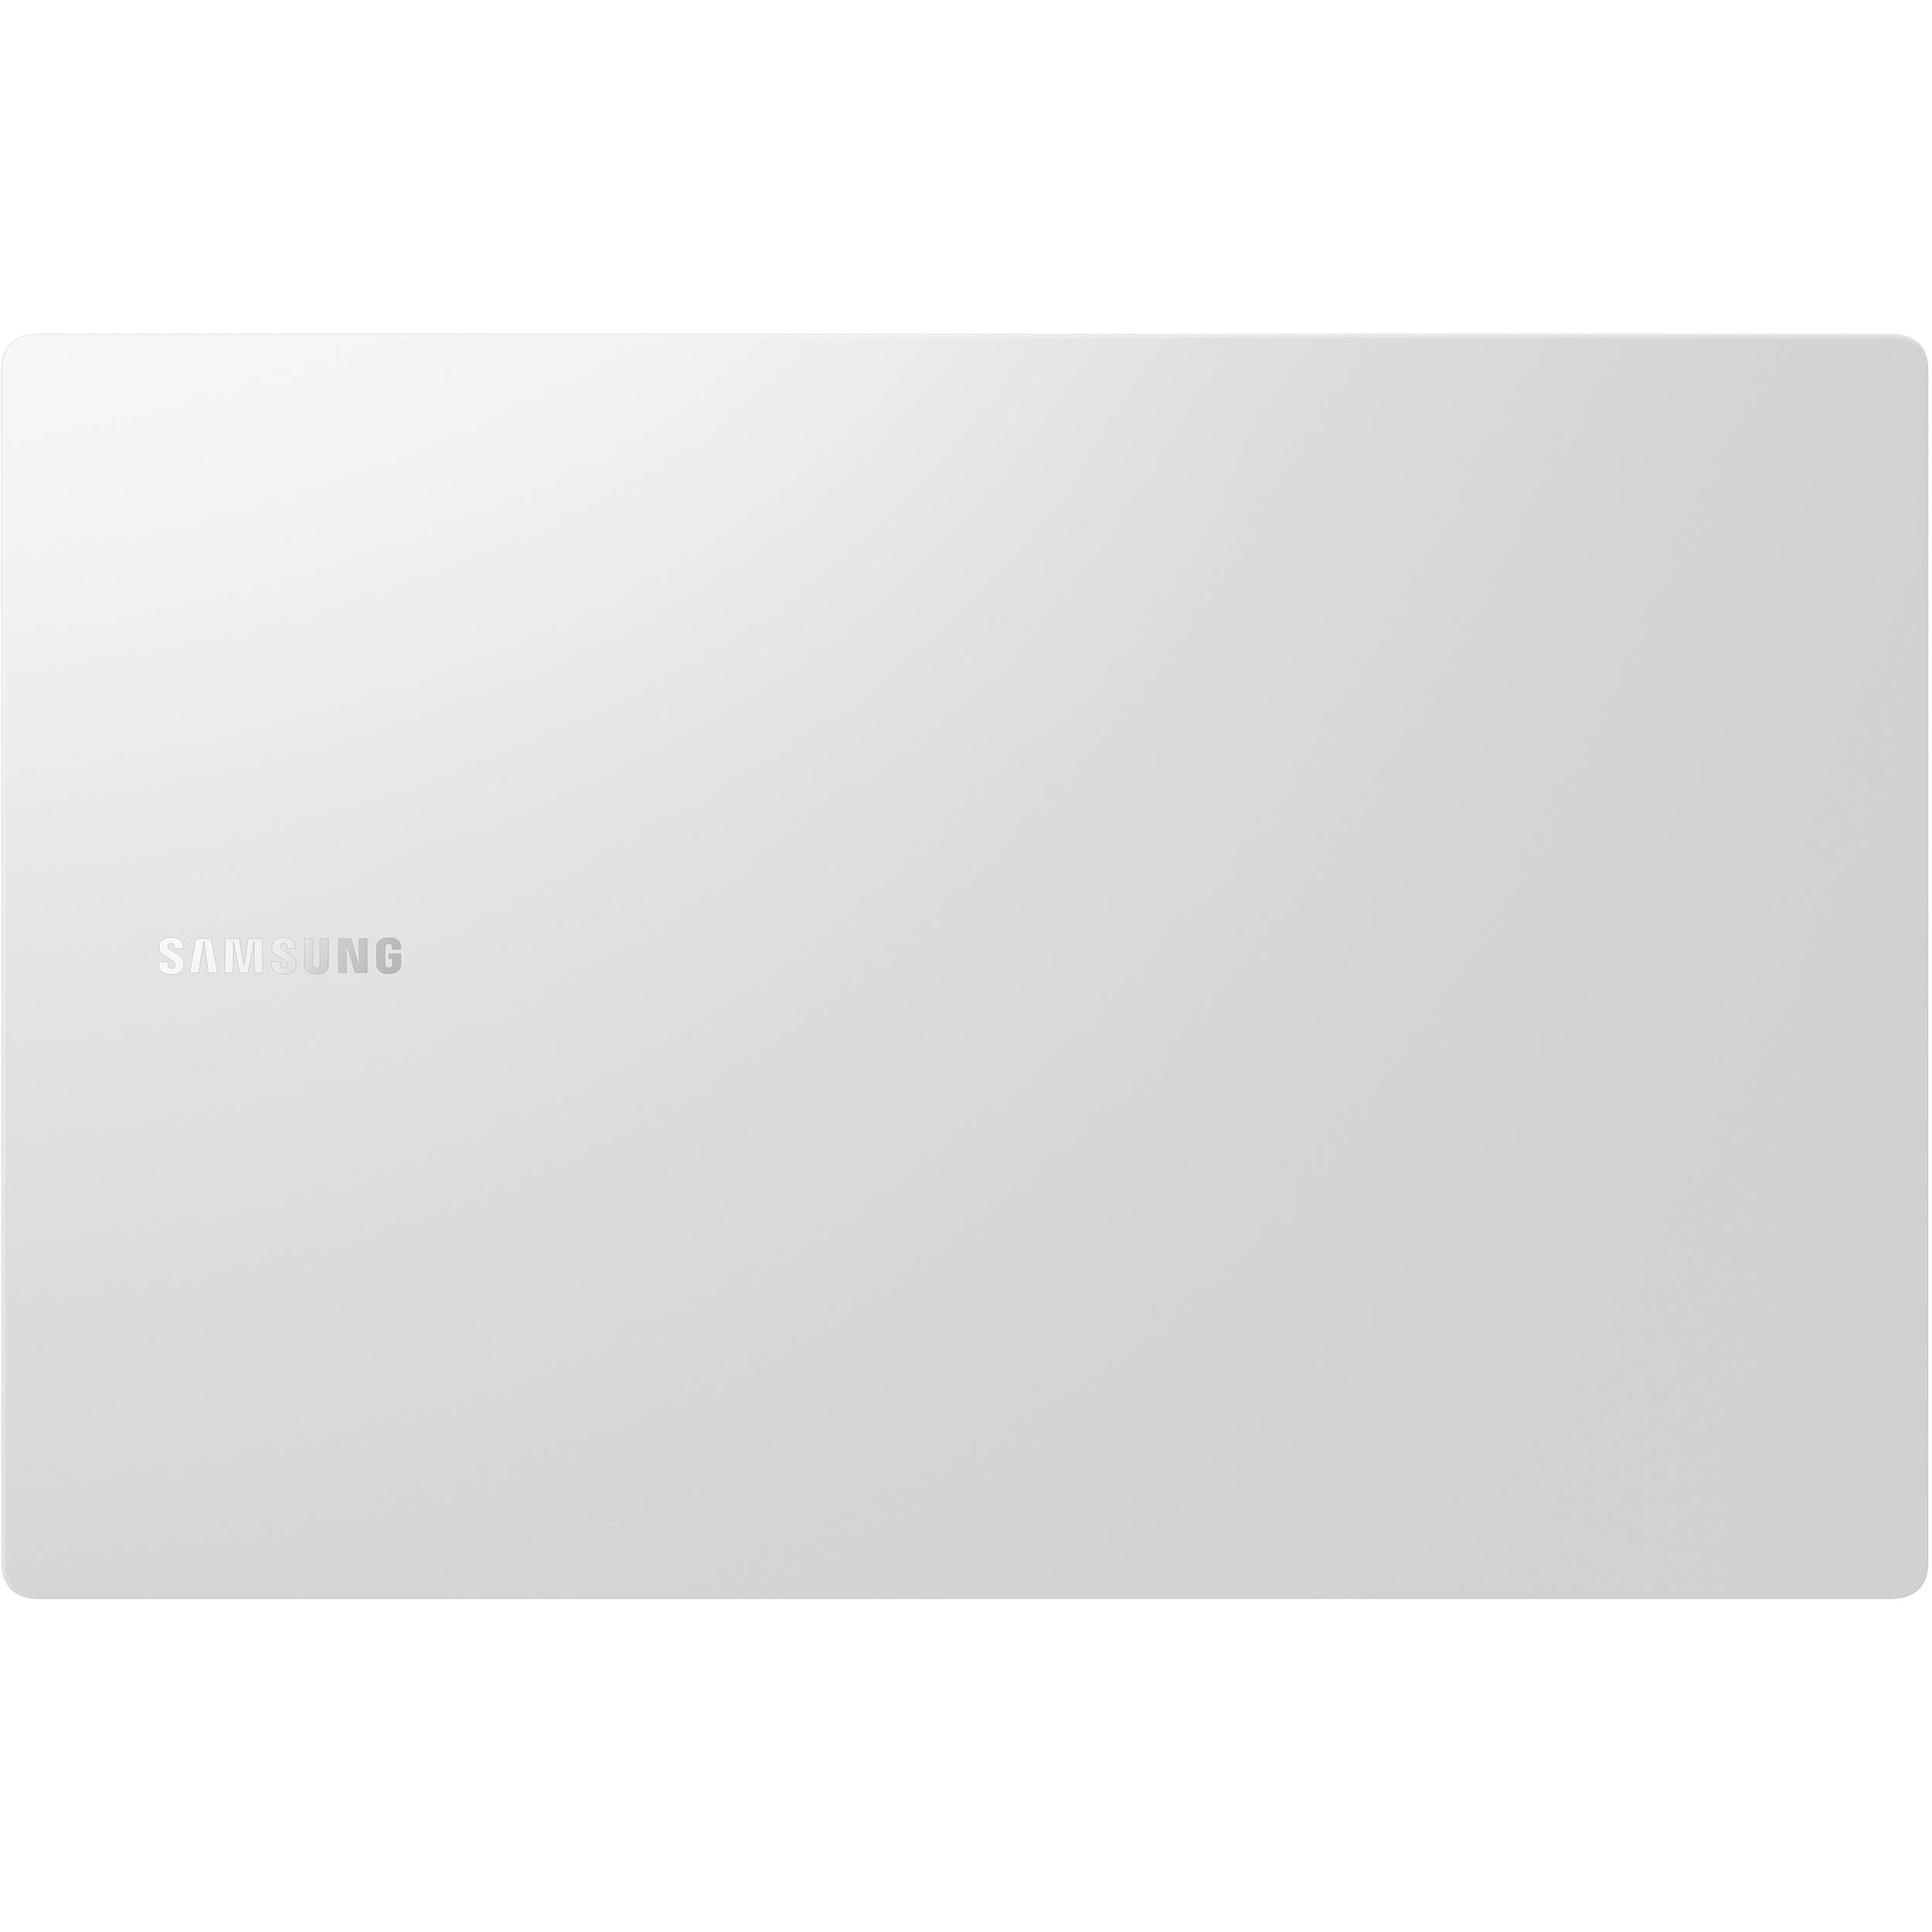 Samsung NP930XDB-KE2US-RB Book Pro 13.3" FHD i7-1165G7 8GB 256GB W10H Silver - Certified Refurbished